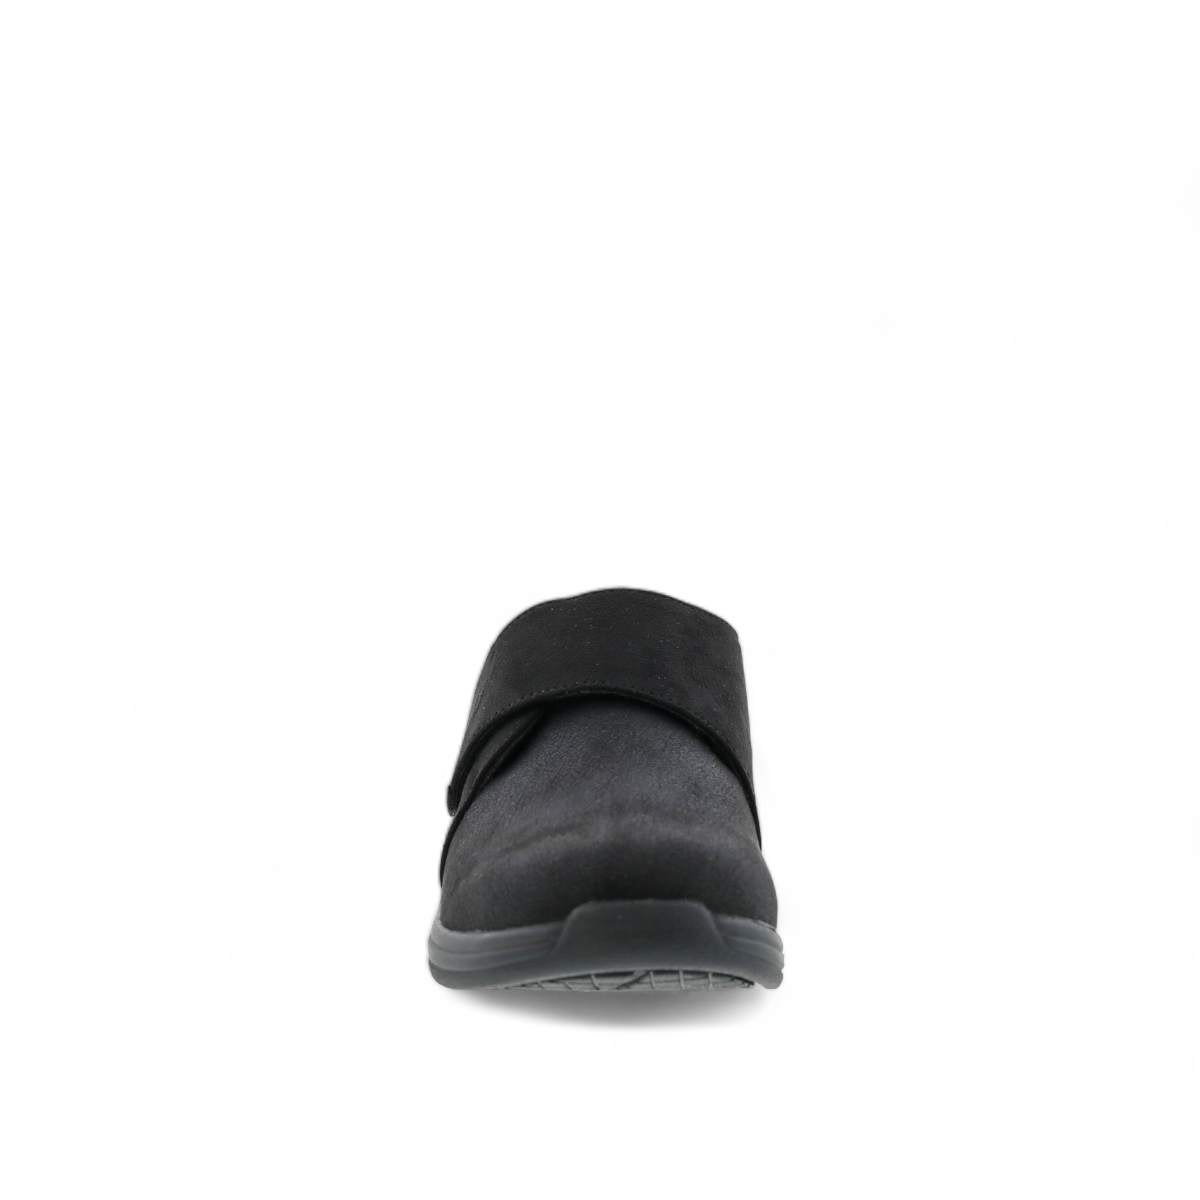 MOONLITE Black Stretch Leather